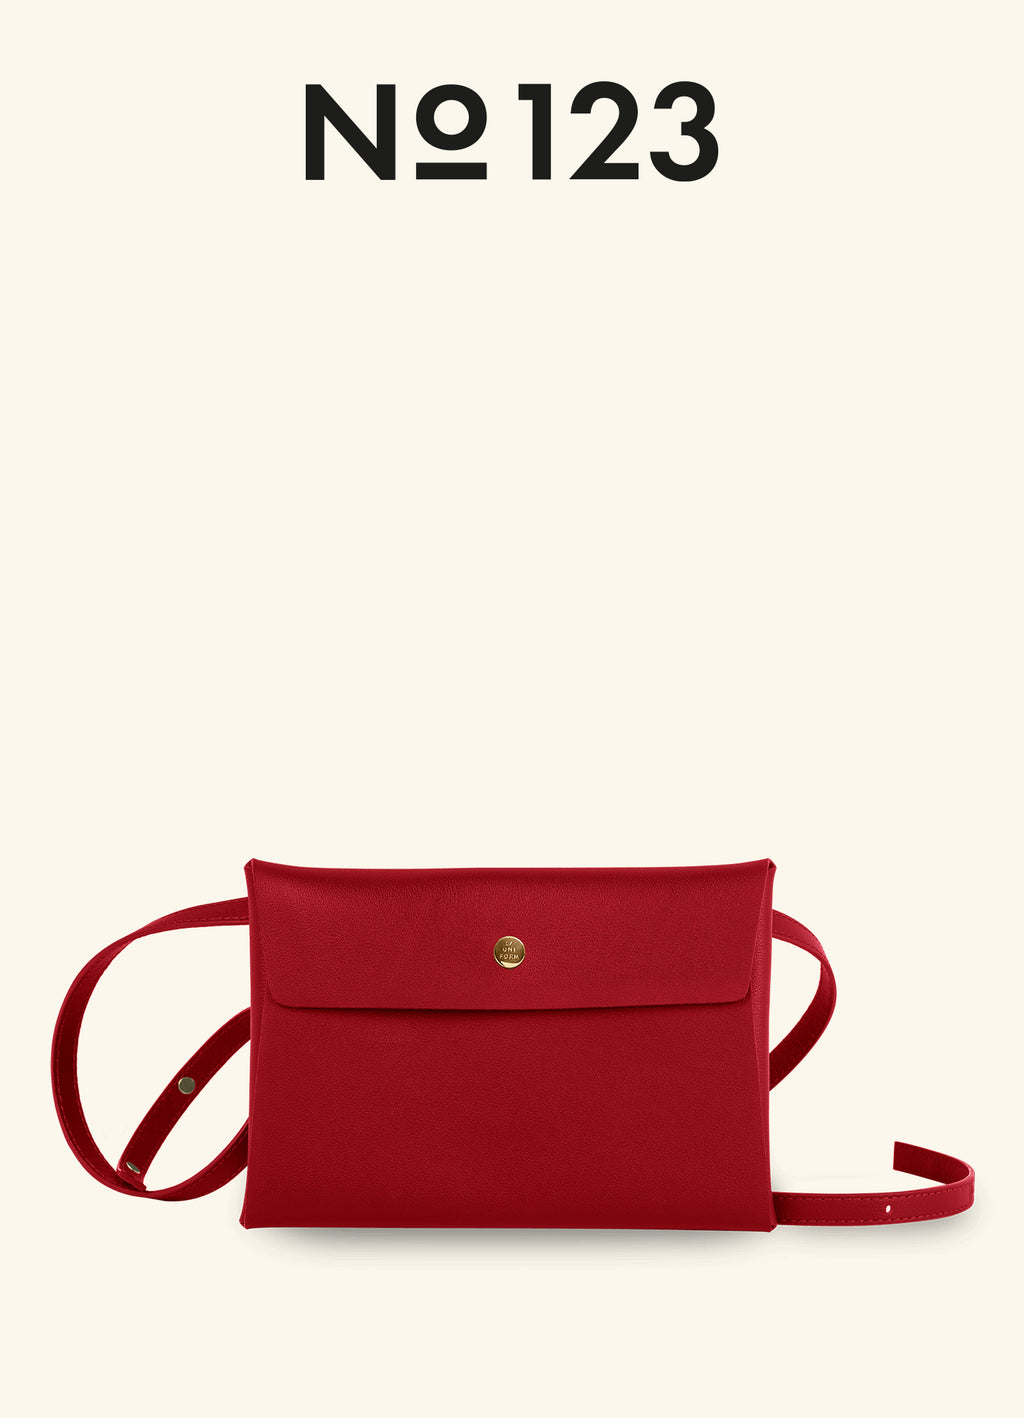 Envelope Leather Handbag-purse-big Purse-leather Clutch-cross